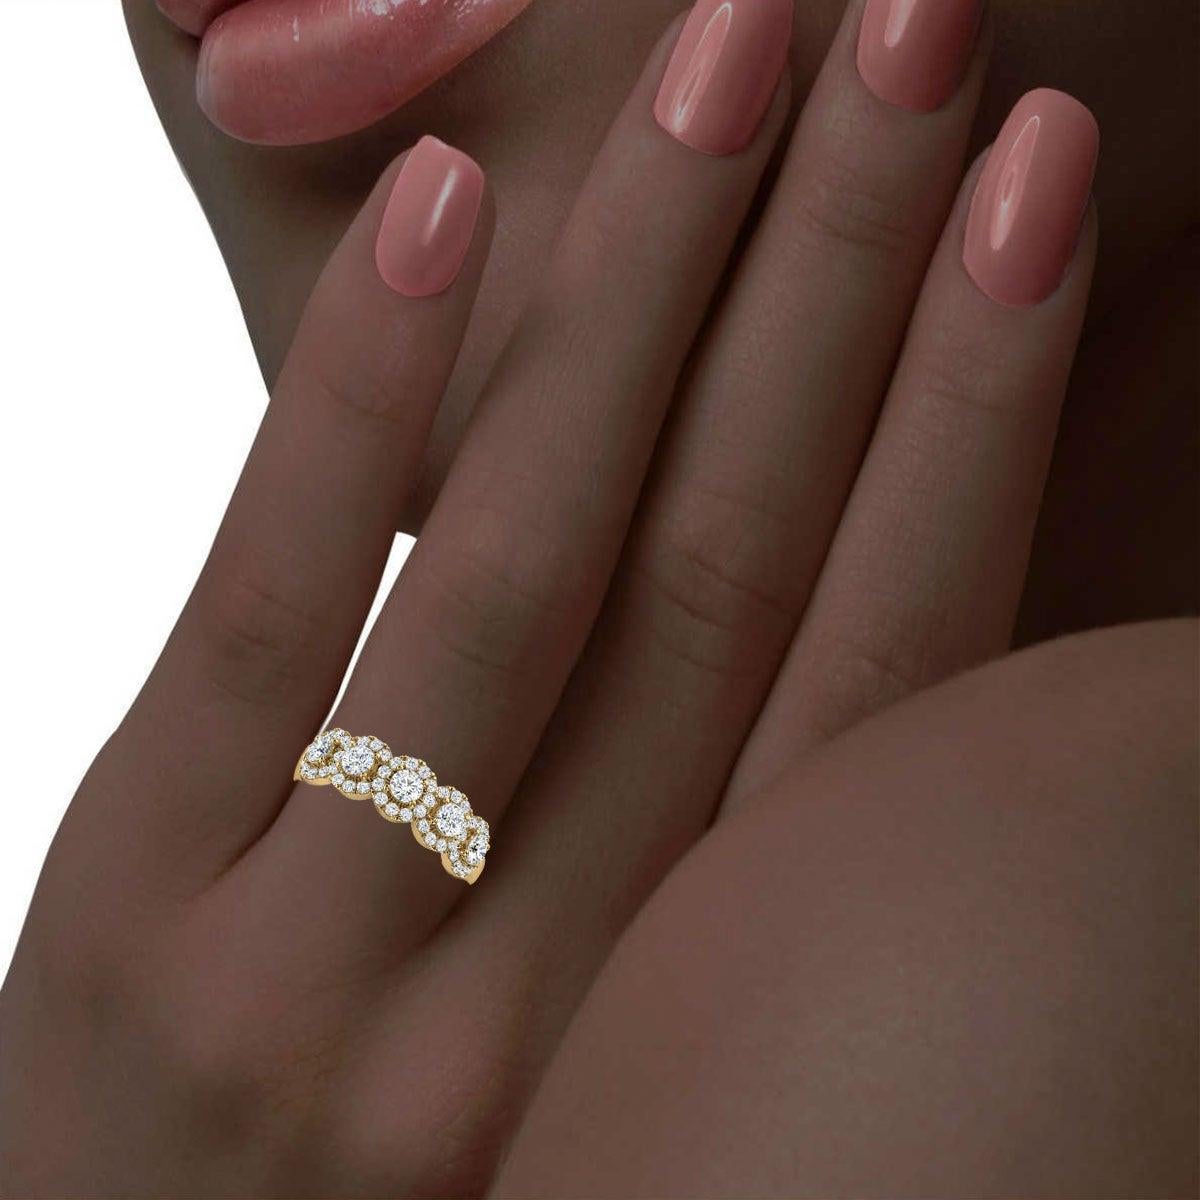 For Sale:  18k Yellow Gold Petite Jenna Halo Diamond Ring '1/2 Ct. Tw' 4